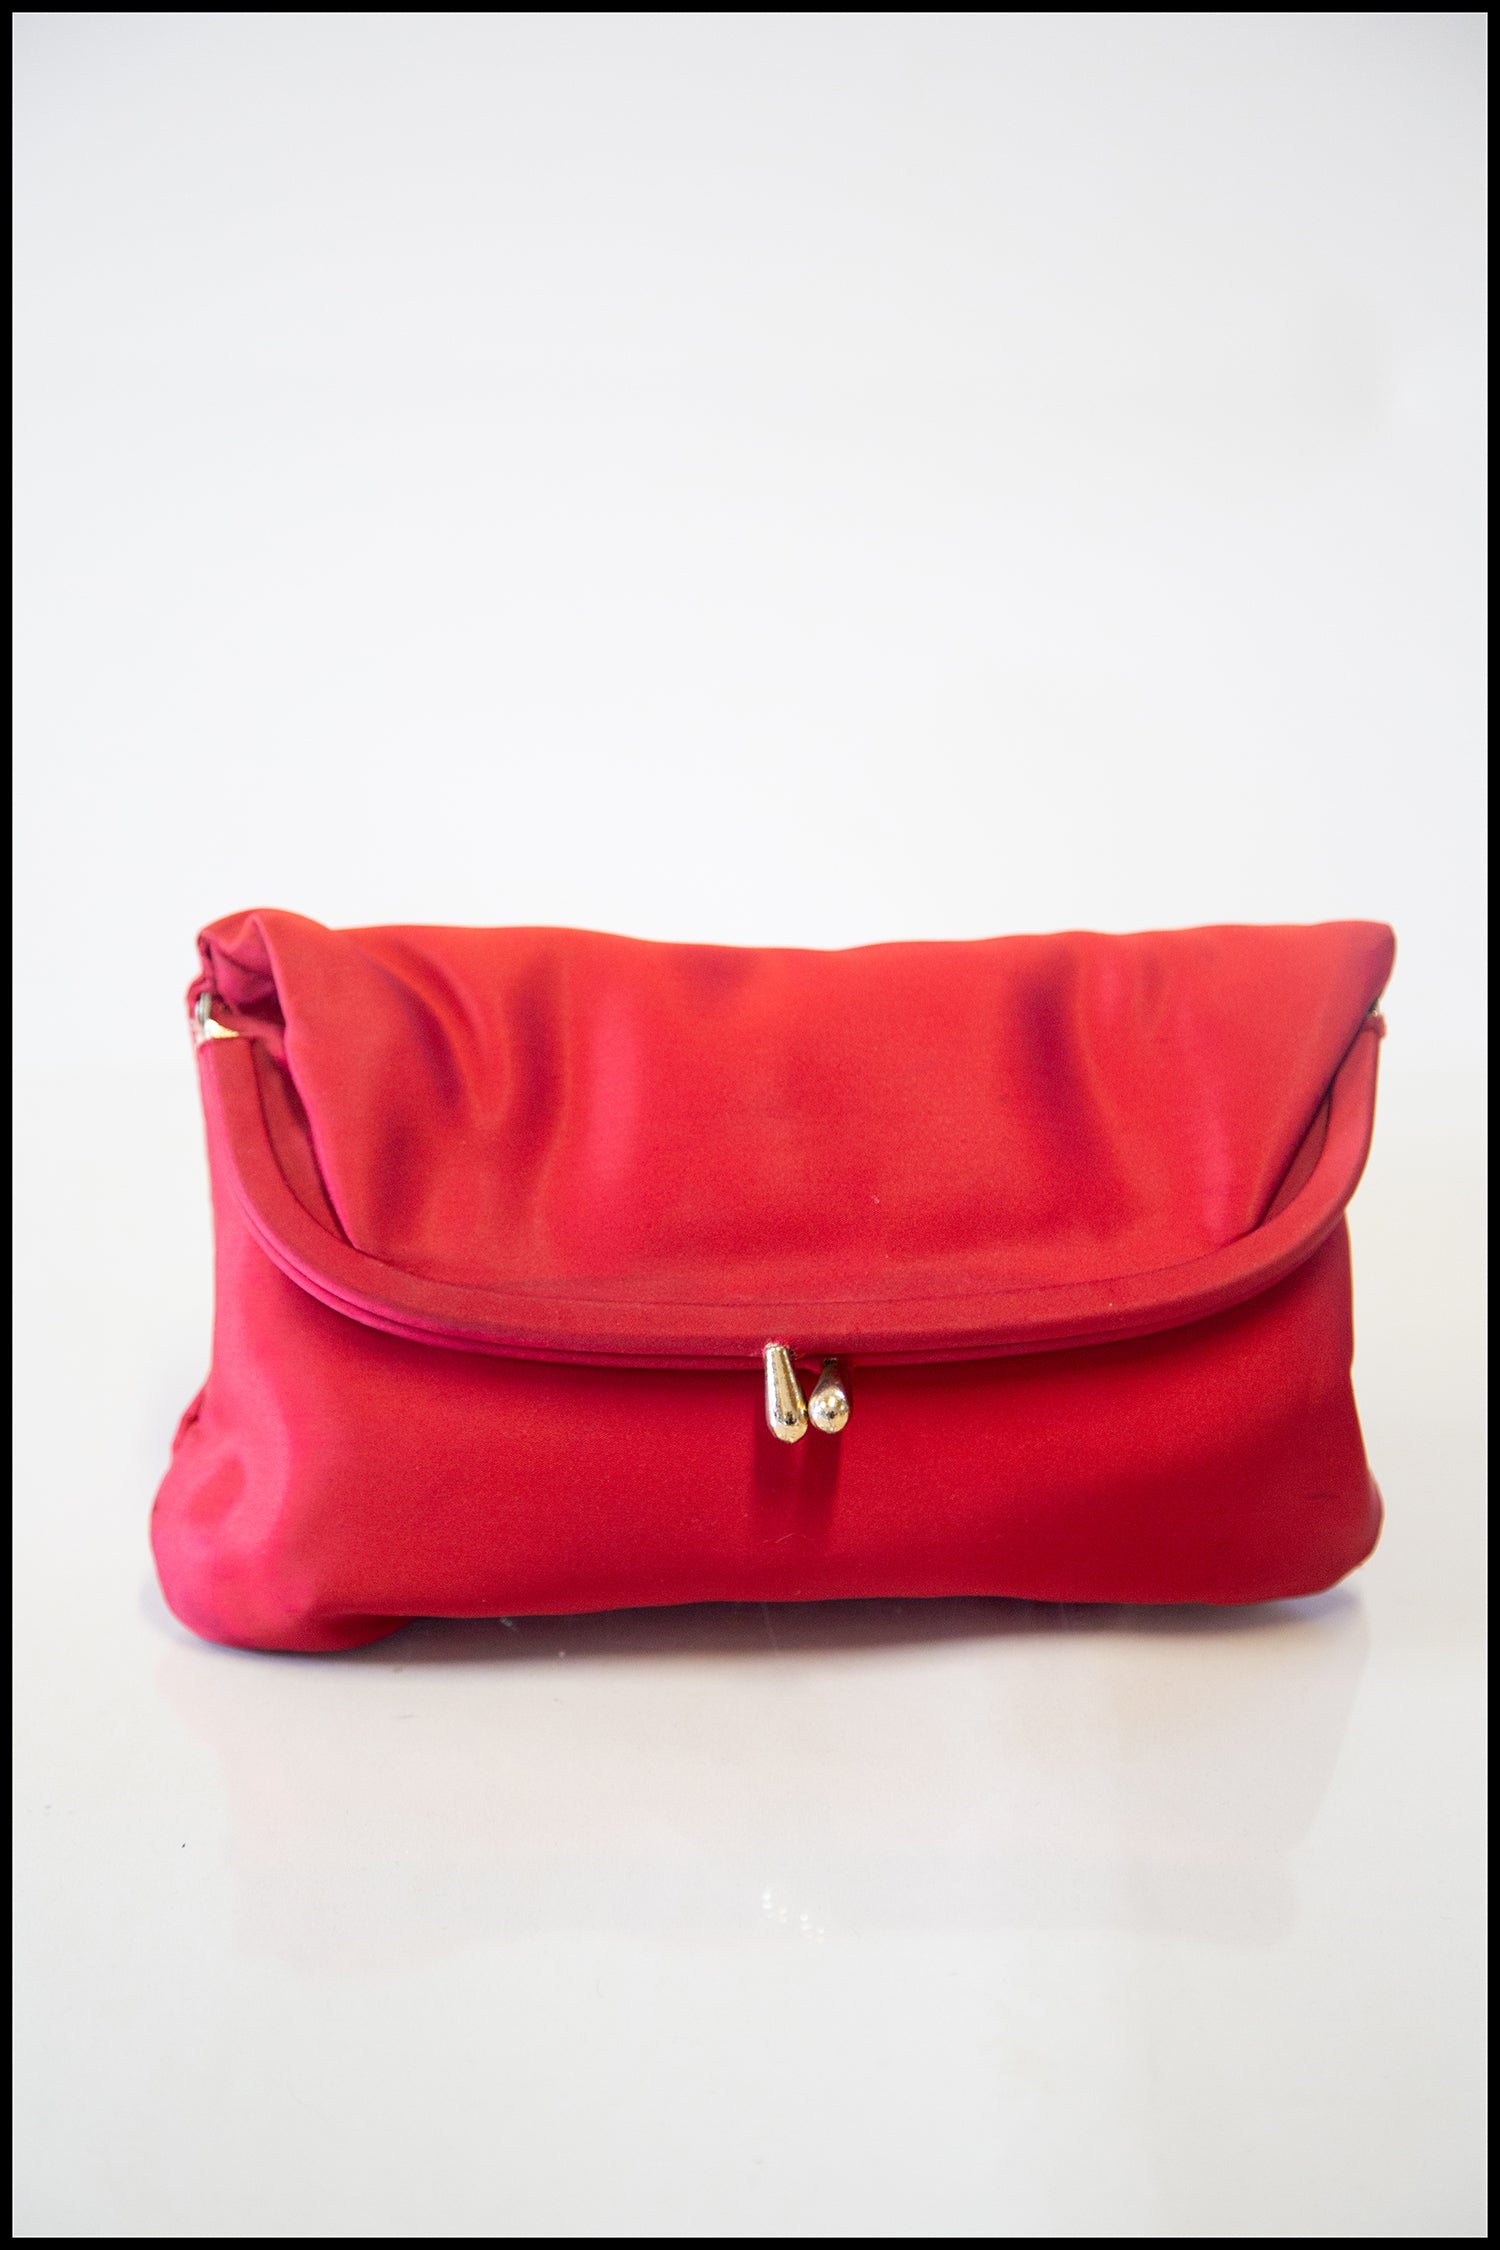 Vintage 1950s Red Satin Clutch Bag – ALEXANDRAKING